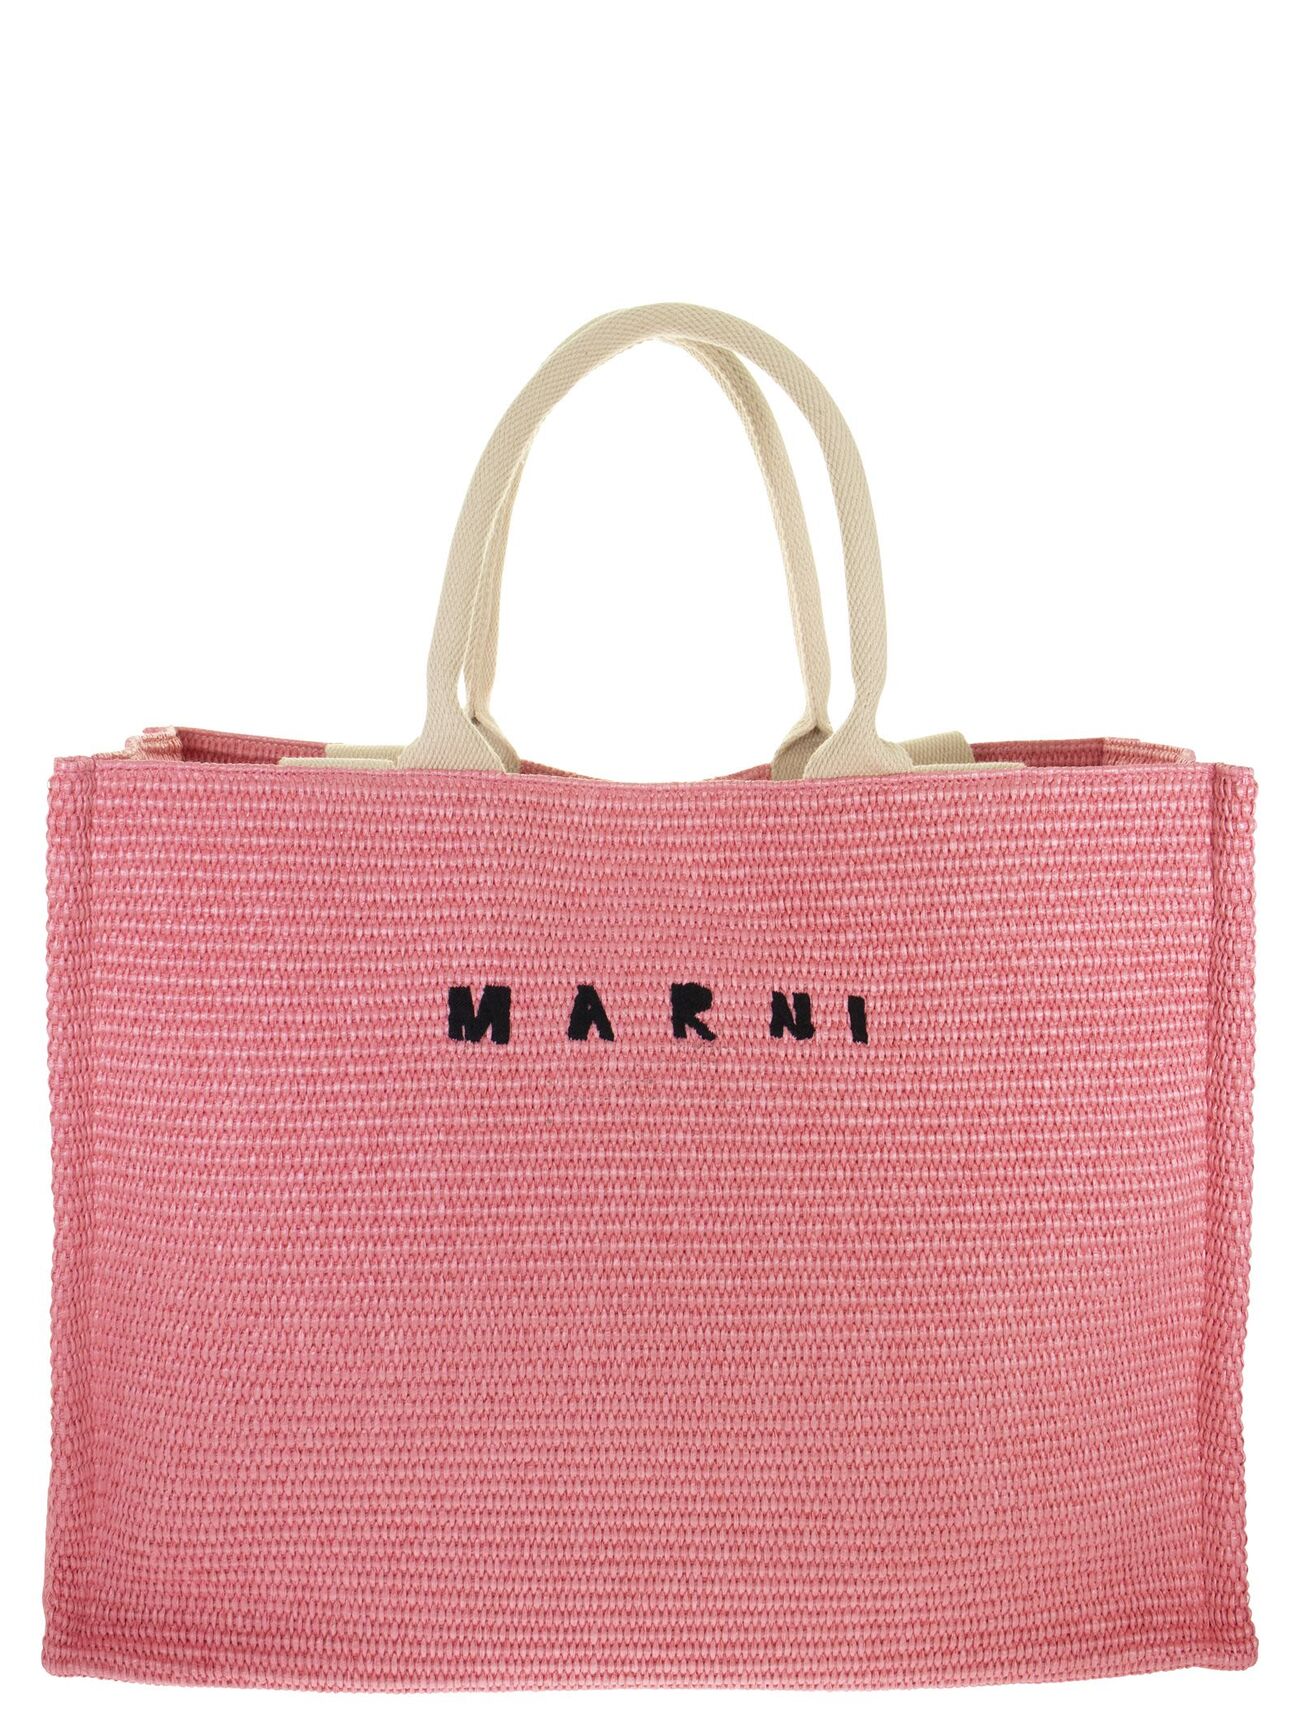 Marni Raffia Bag in pink